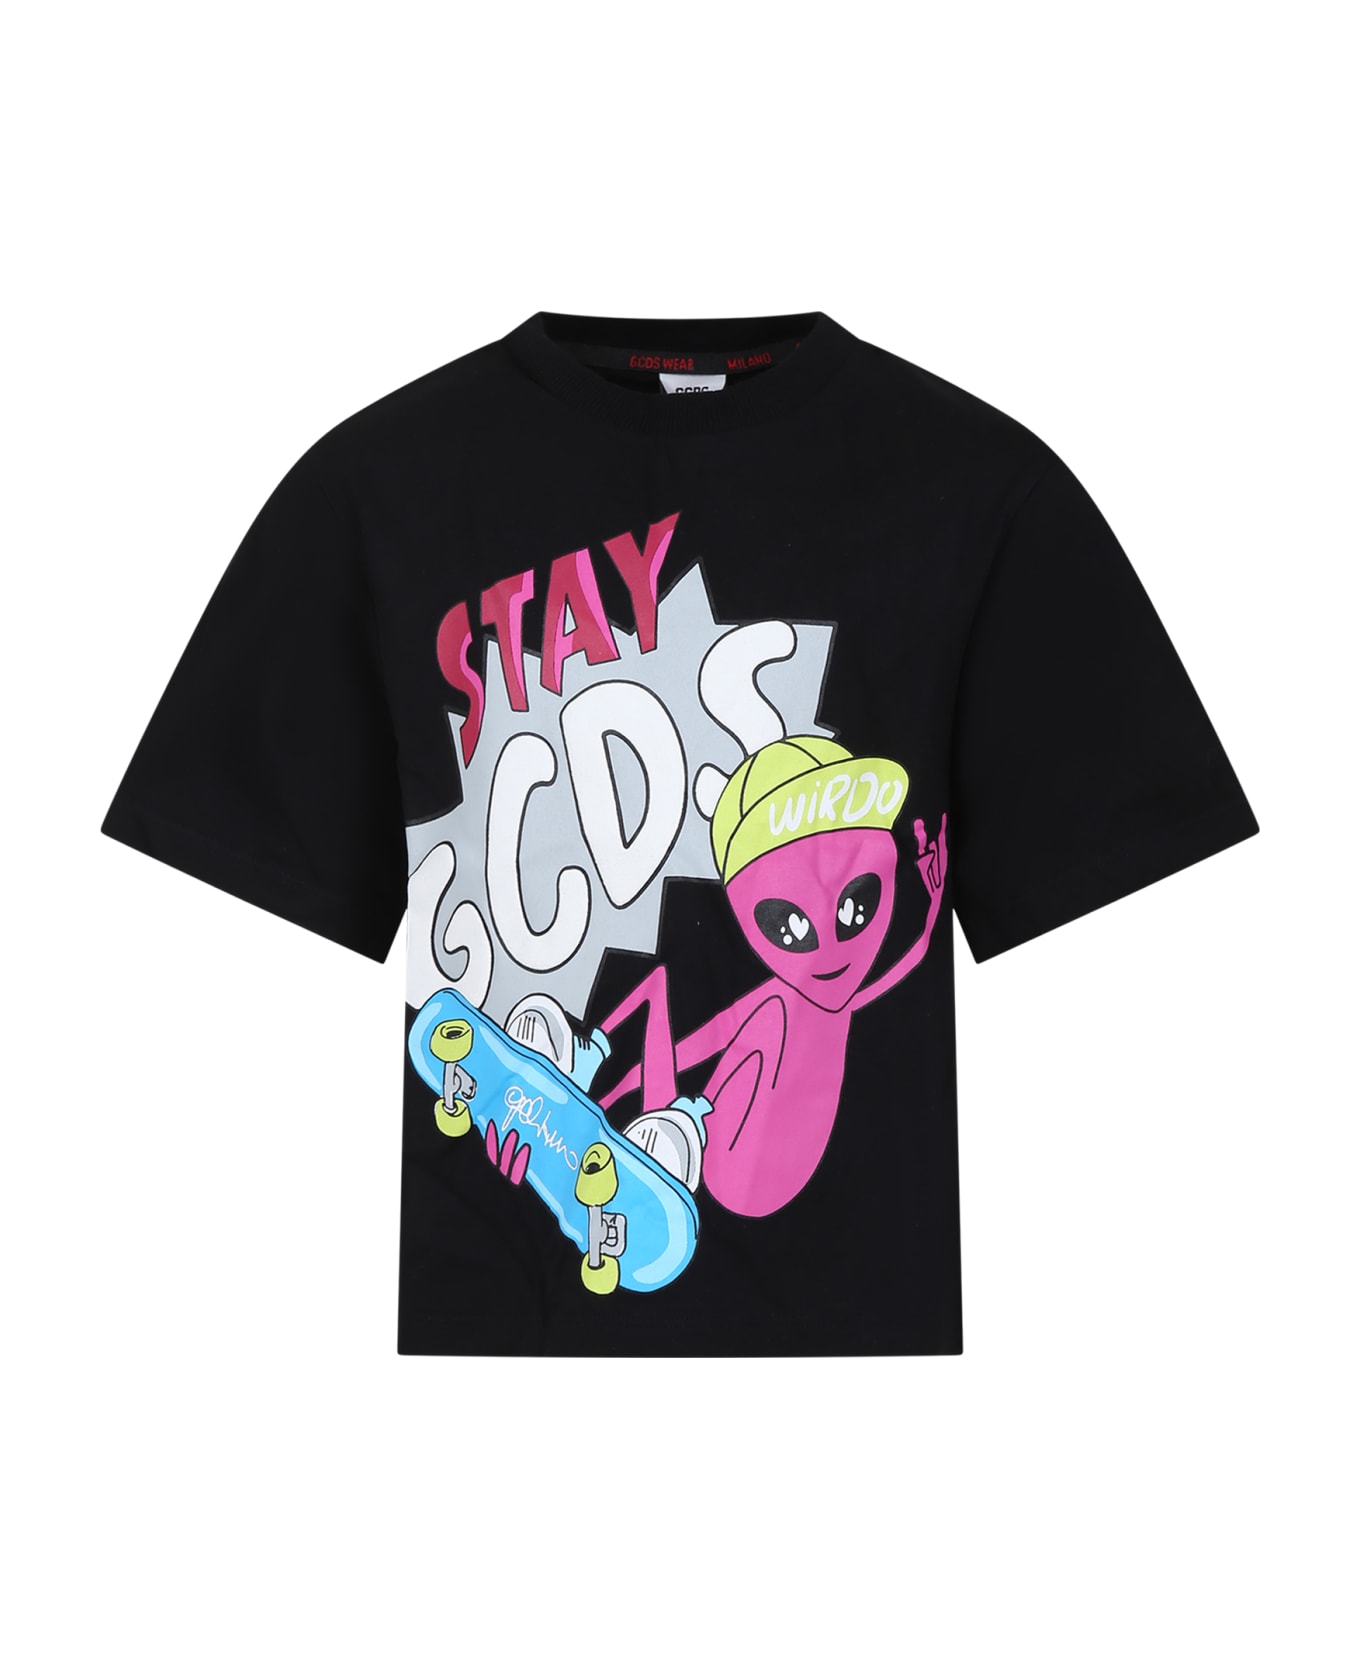 GCDS Mini Black T-shirt For Boy With Alien Print And Logo - Nero/black